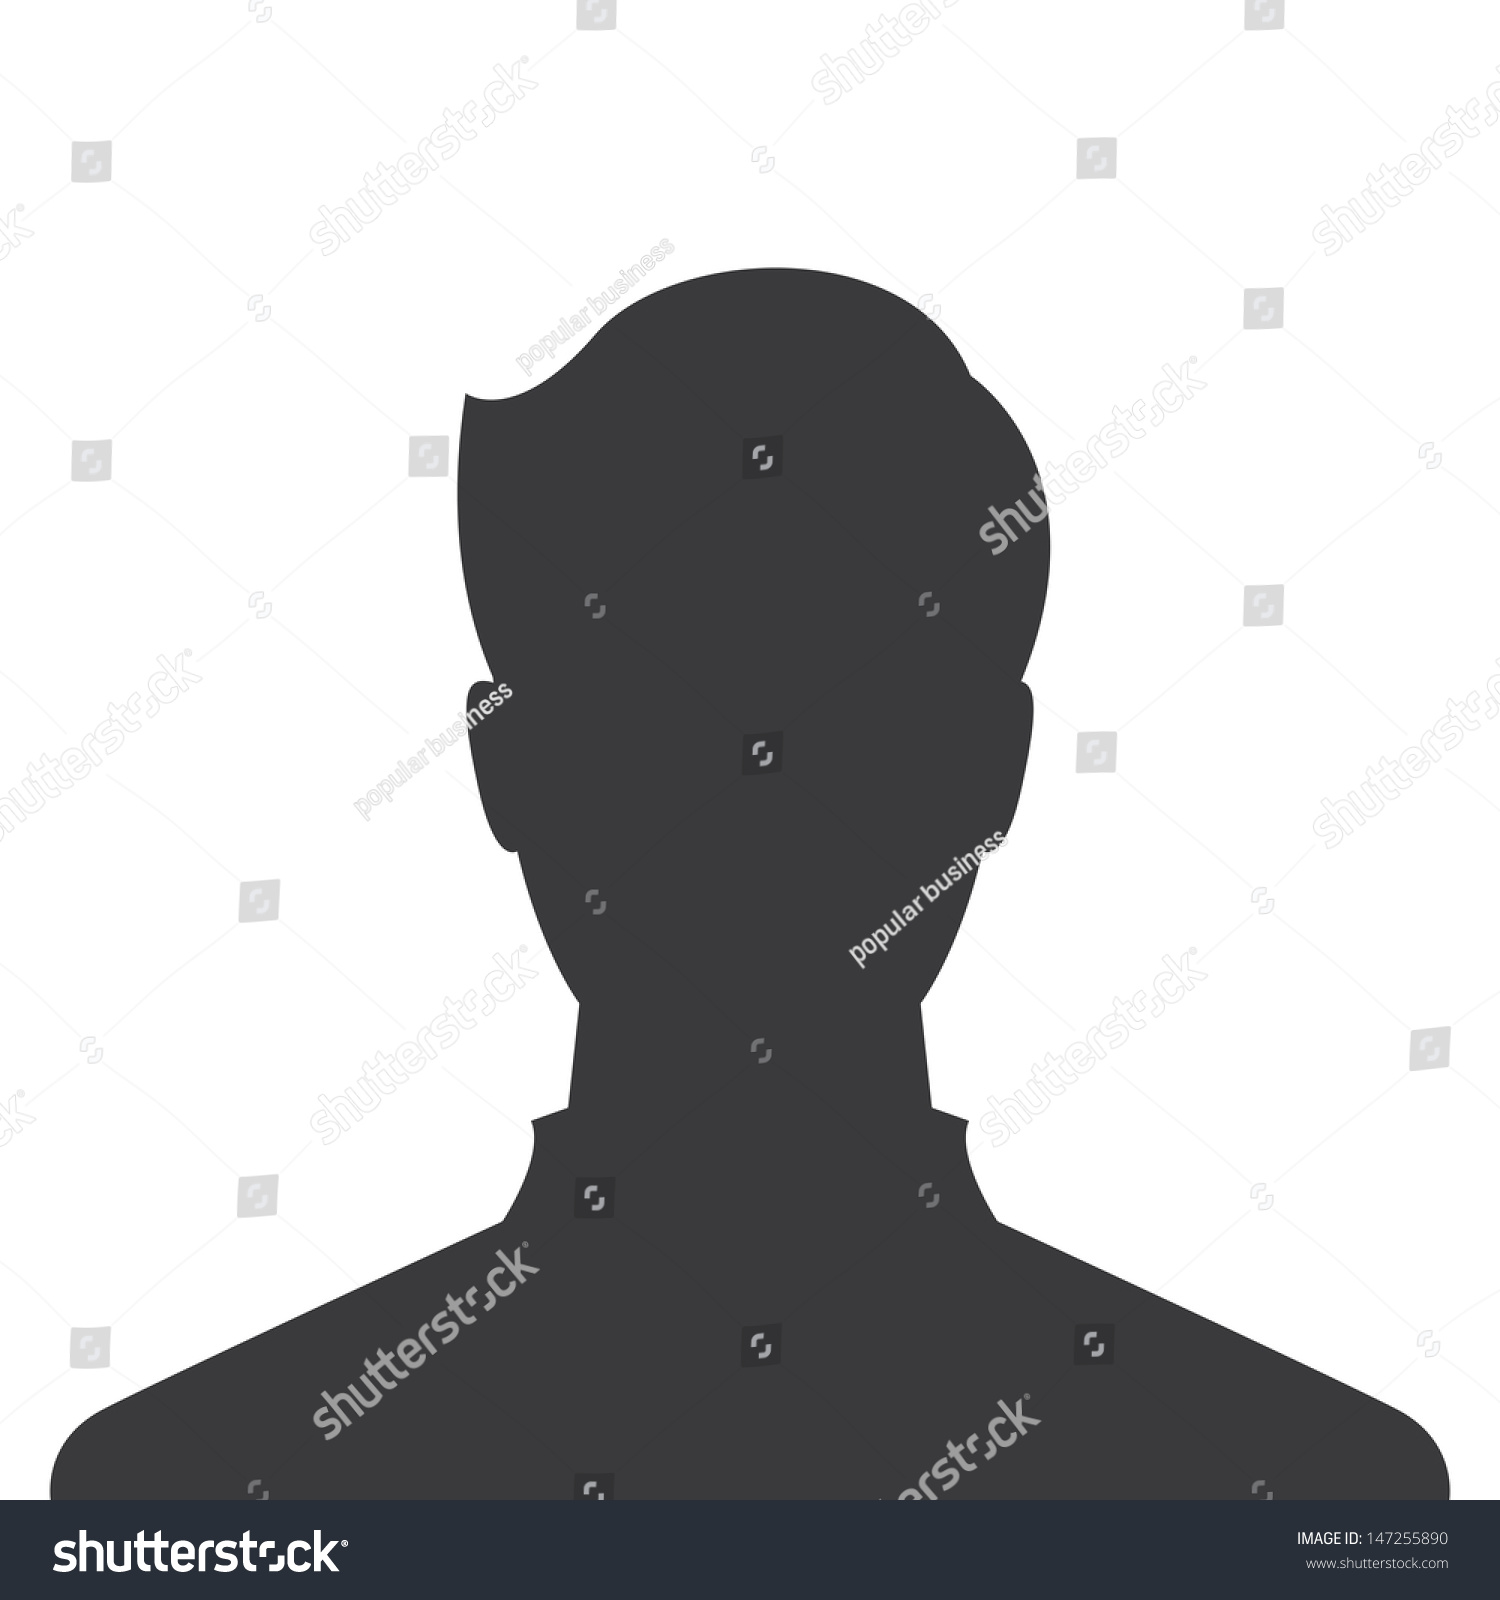 Male Profile Picture Silhouette Profile Avatar Stock Vector (Royalty ...